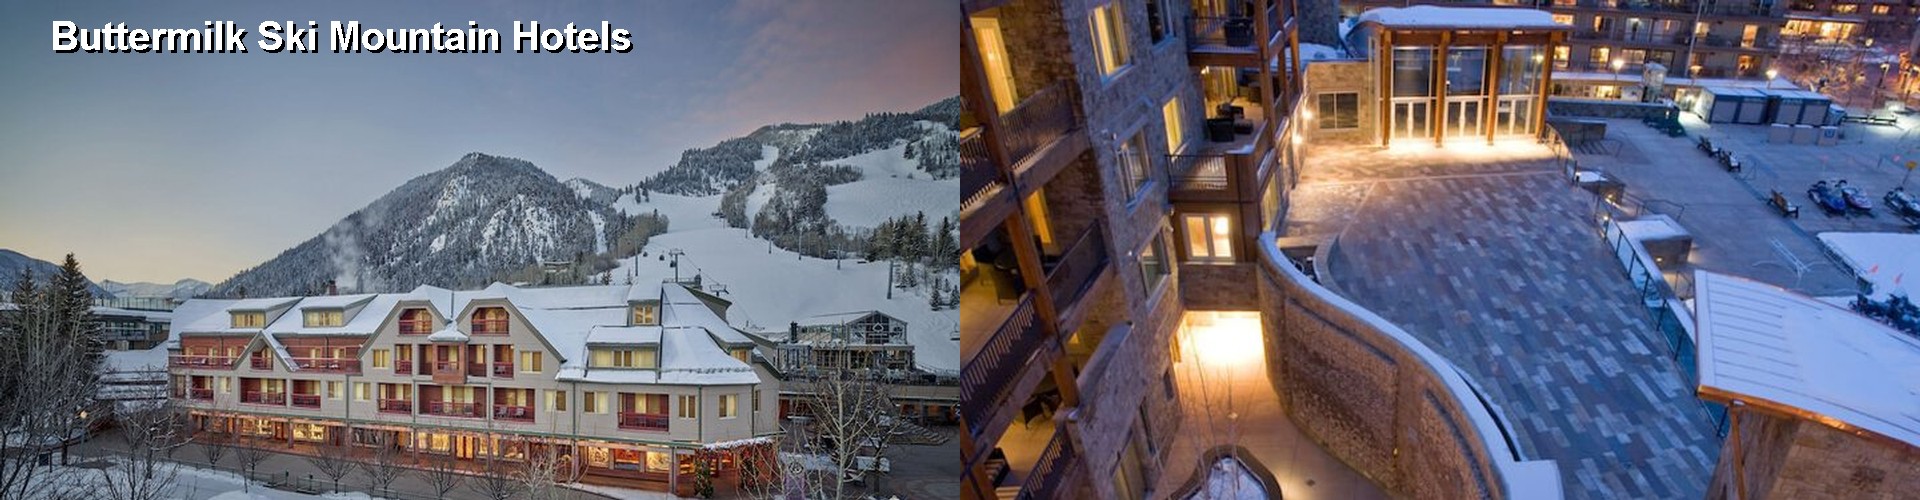 5 Best Hotels near Buttermilk Ski Mountain